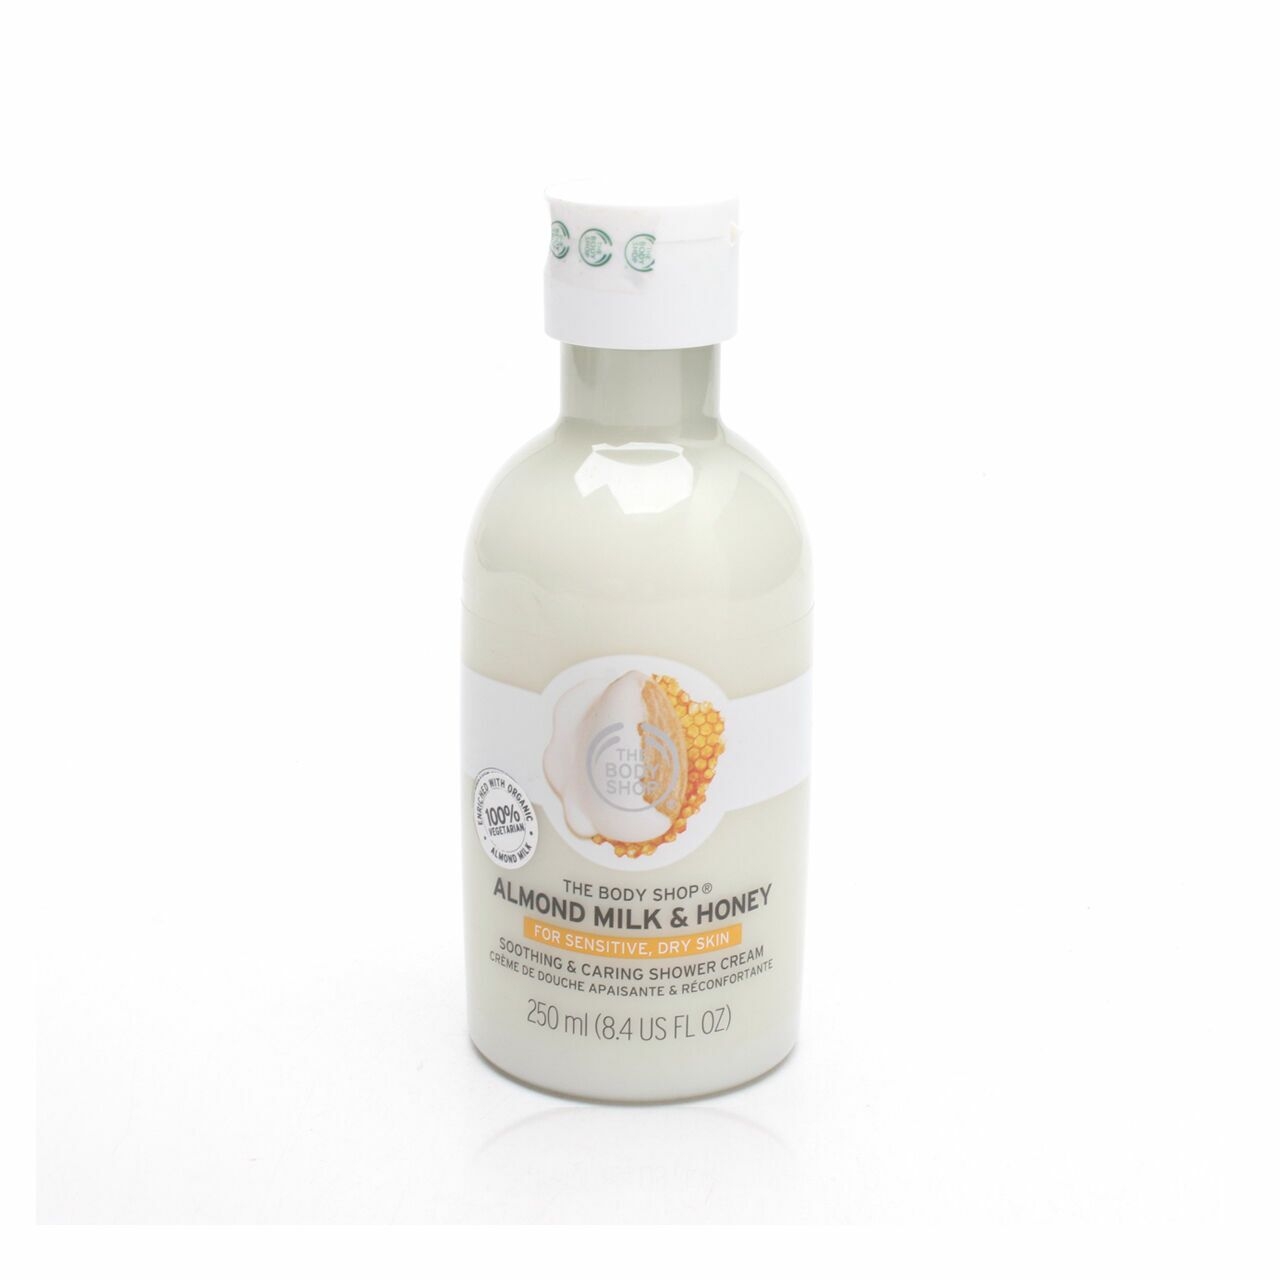 The Body Shop Almond Milk & Honey for Sensitive, Dry Skin Body Care